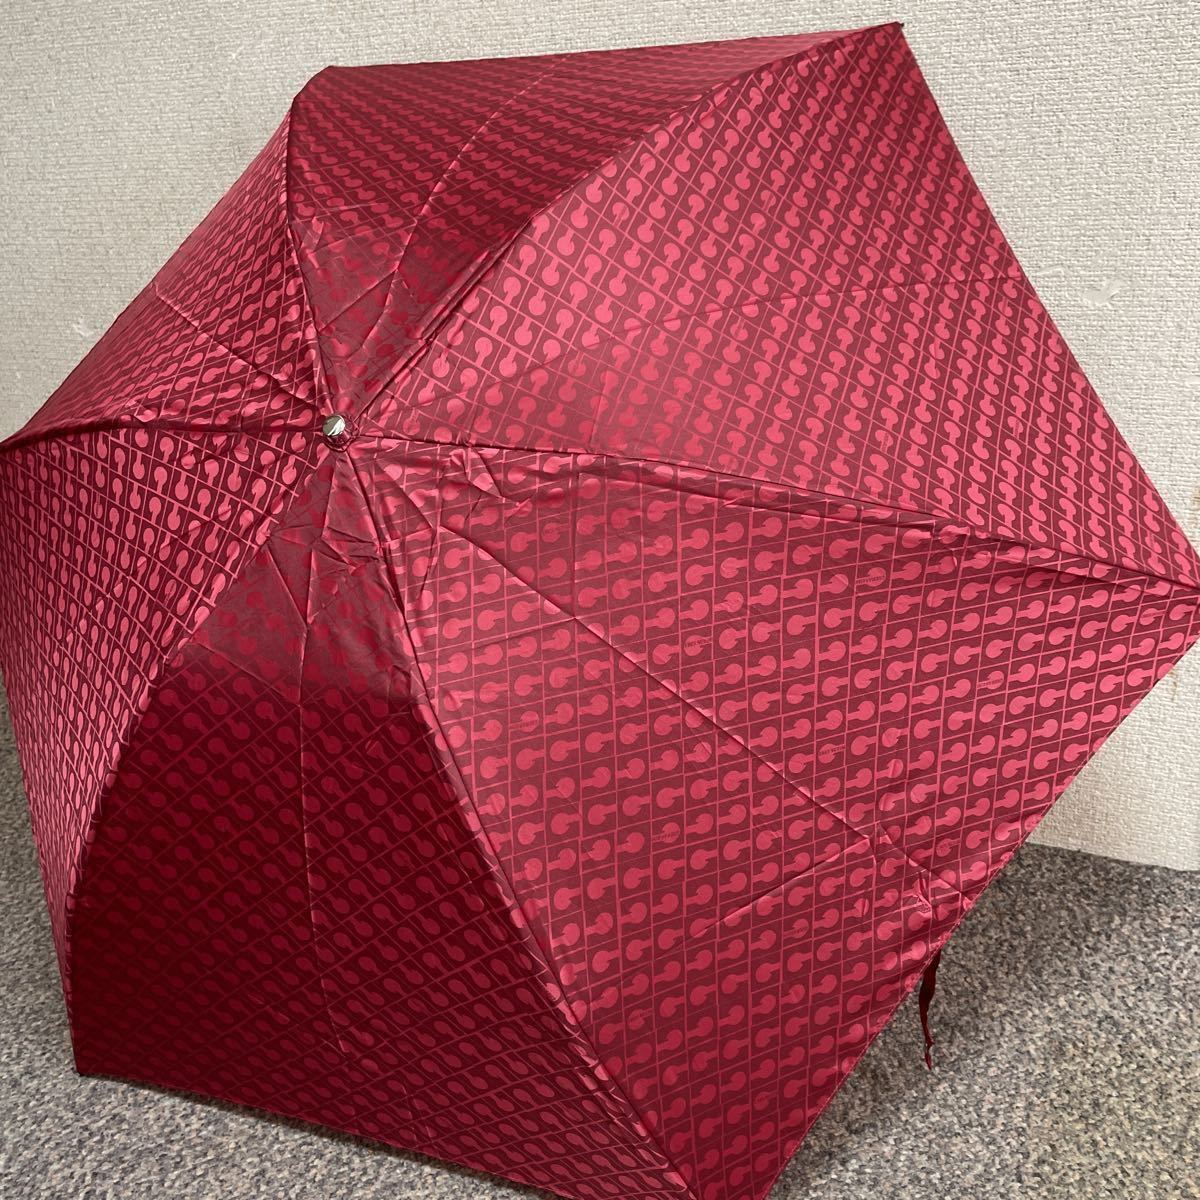  new goods Gherardini umbrella umbrella folding umbrella total pattern light weight 